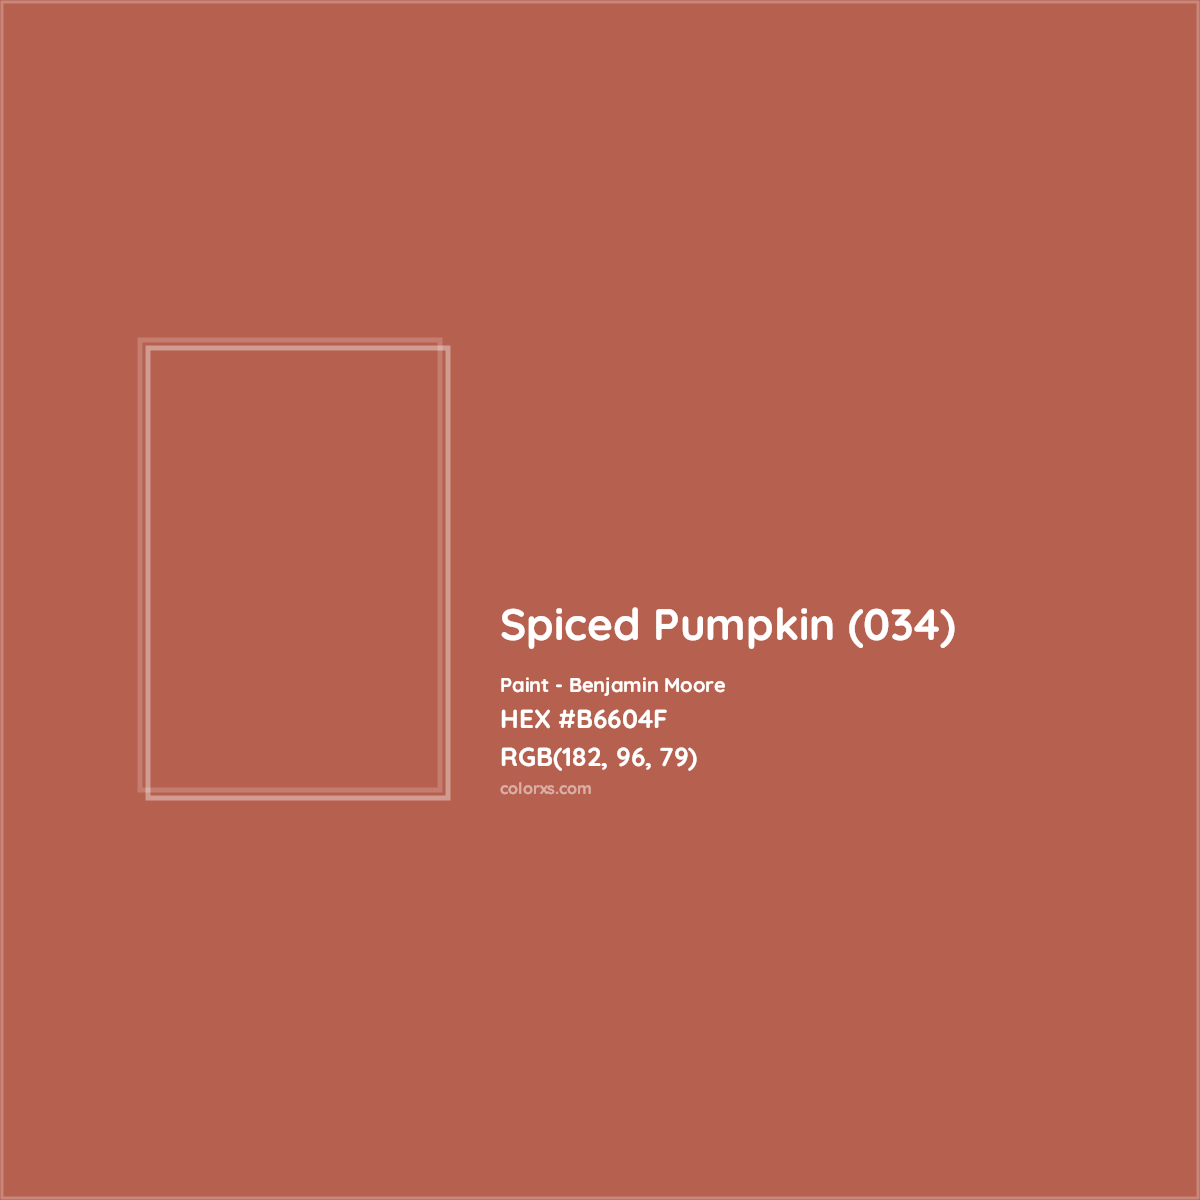 HEX #B6604F Spiced Pumpkin (034) Paint Benjamin Moore - Color Code